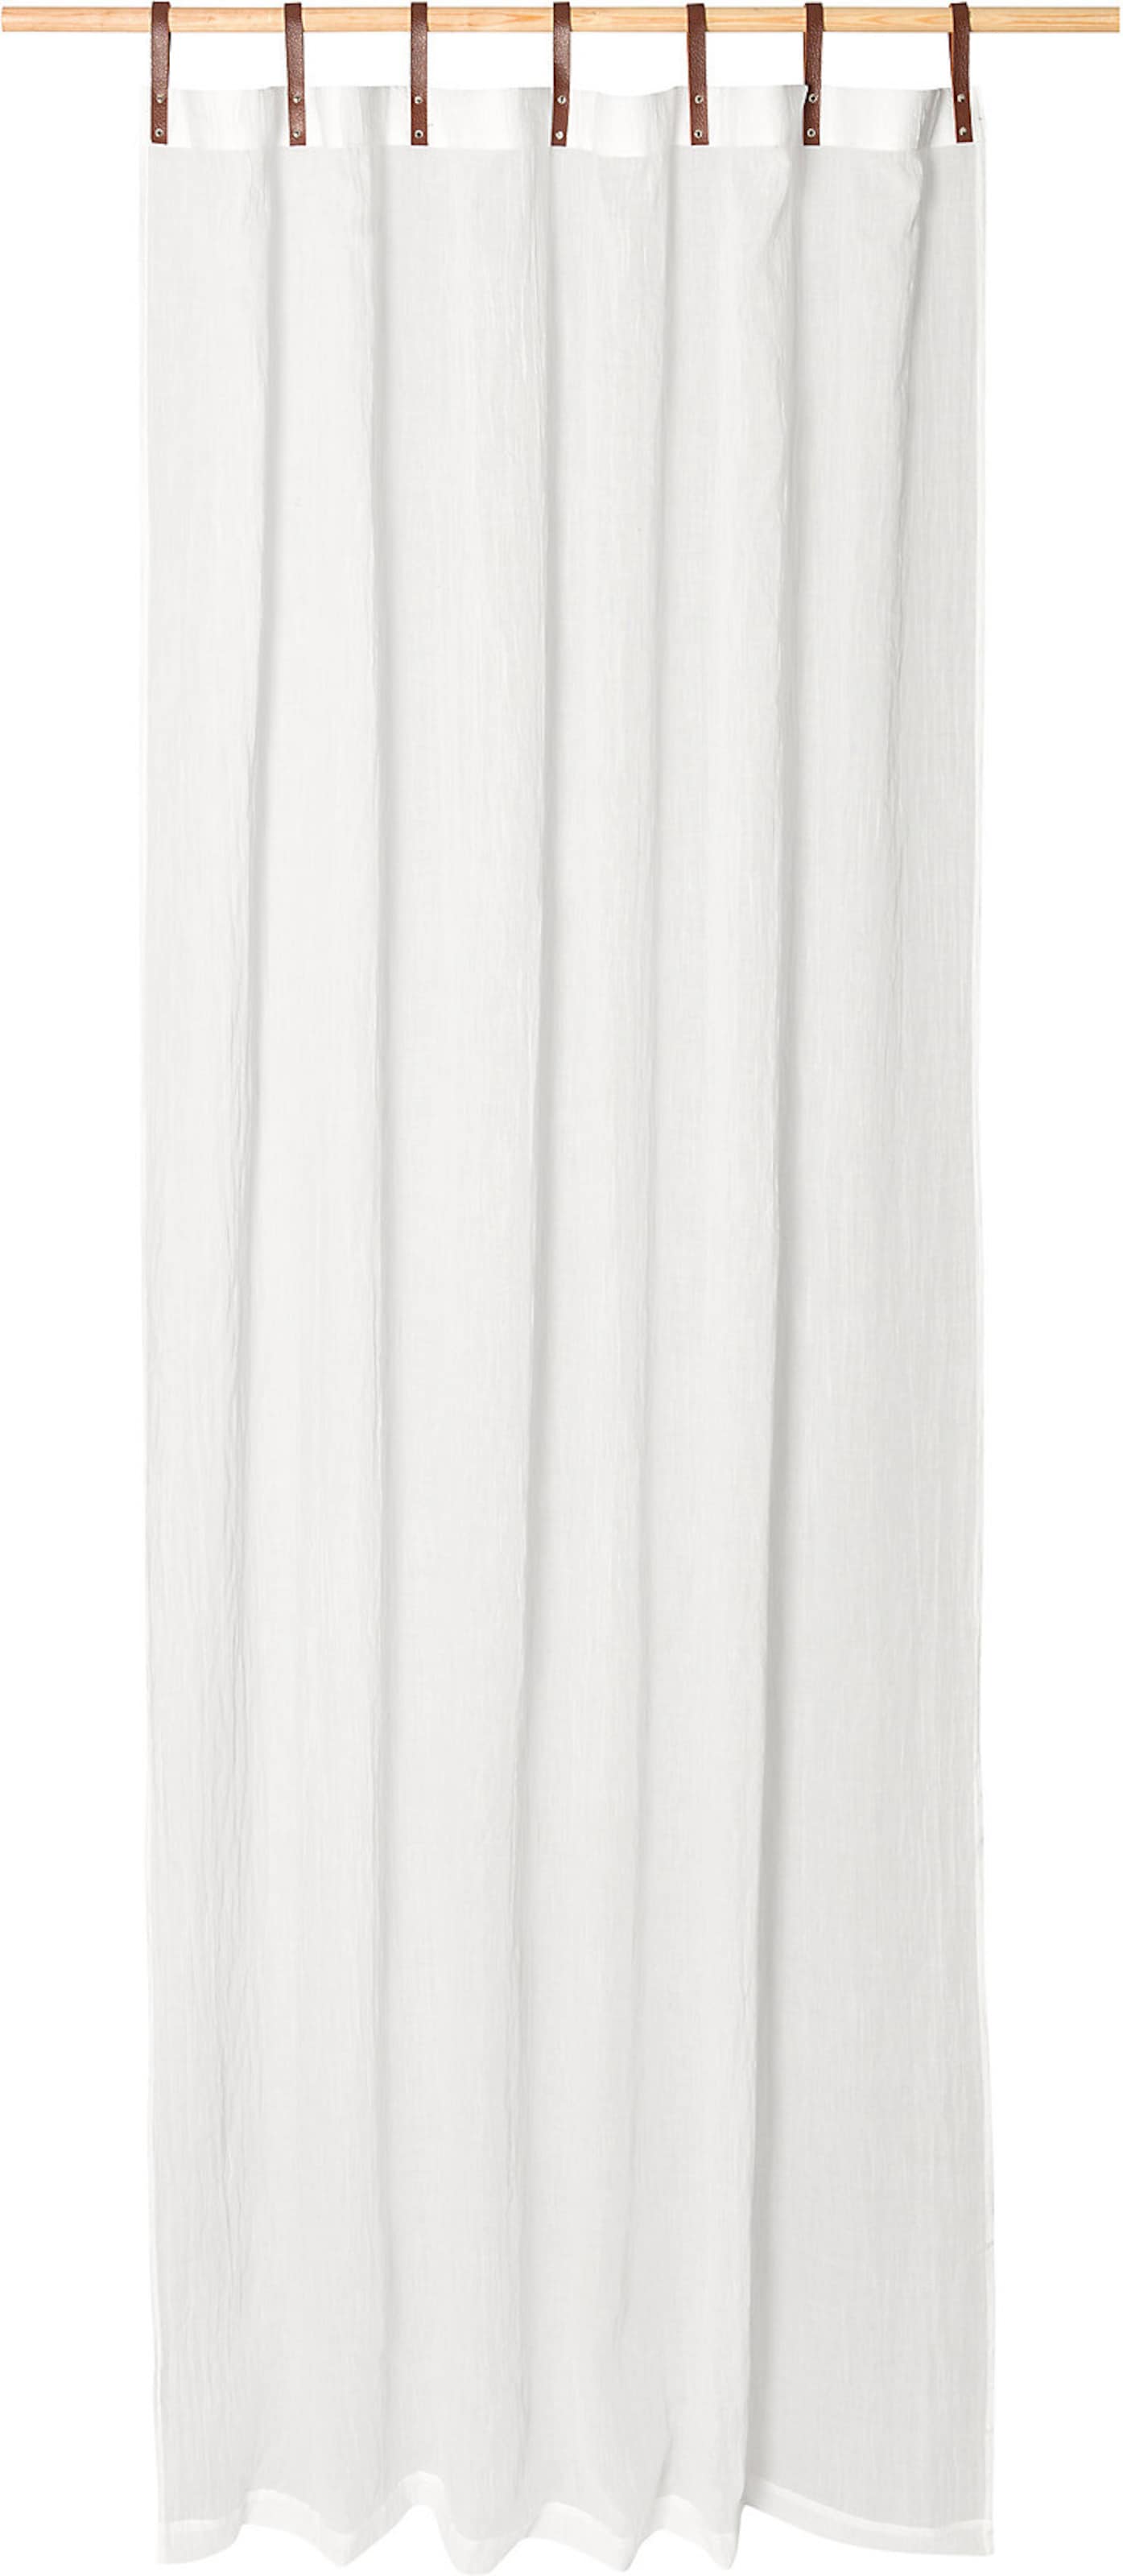 MAGMA Vorhang "Evi" in Weiß 